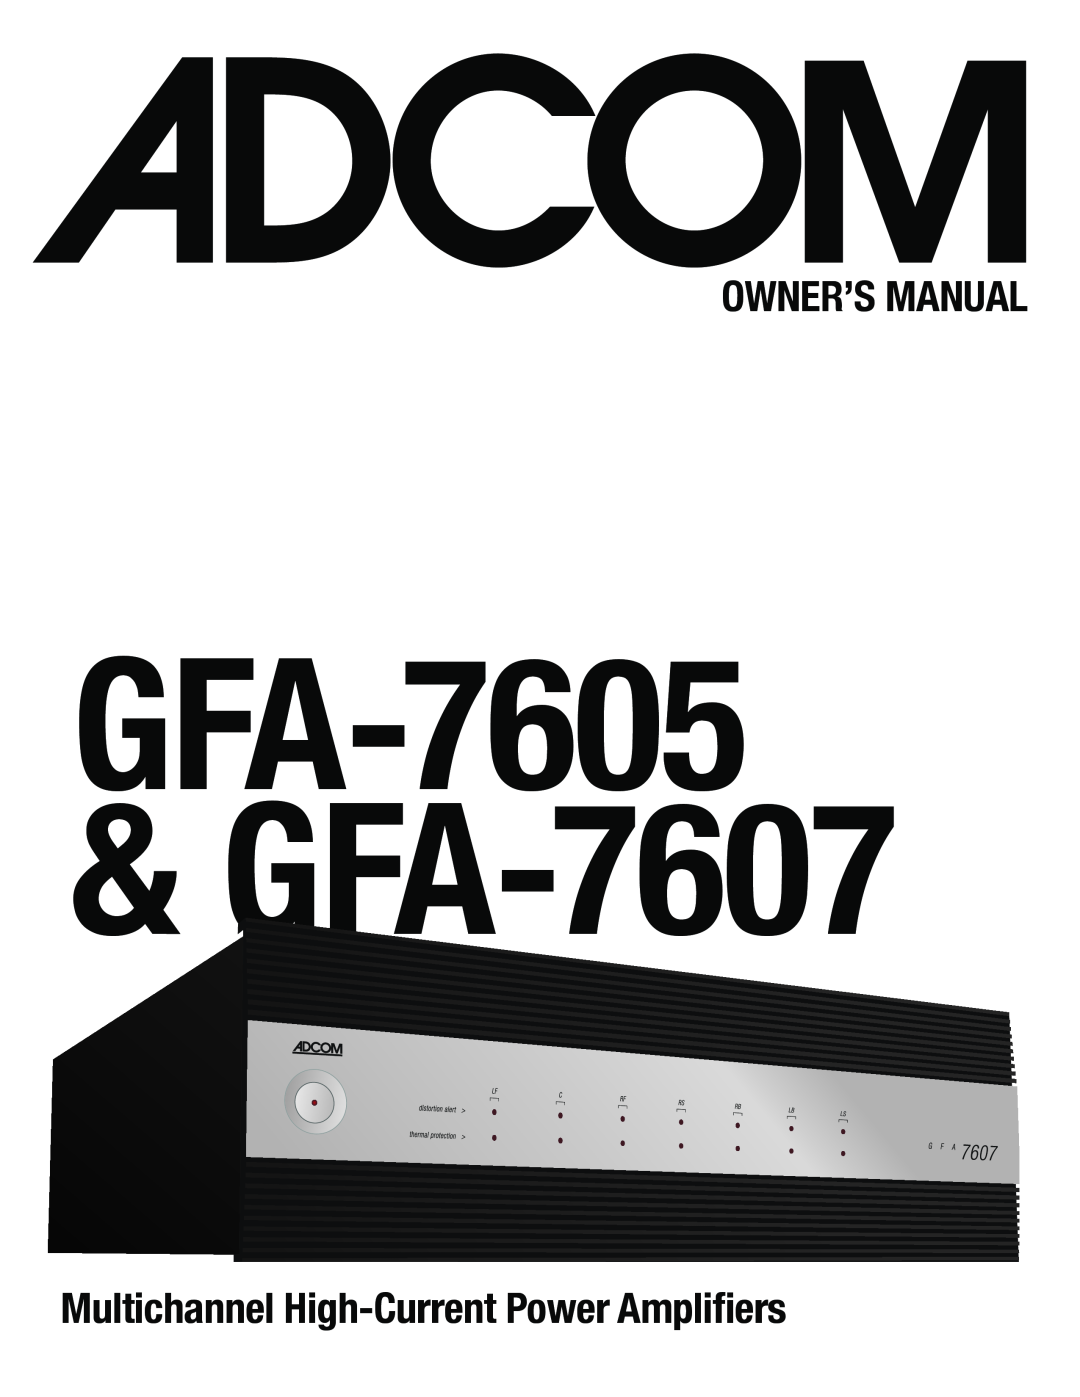 Adcom owner manual GFA-7605& GFA-7607, Multichannel High-CurrentPower Amplifiers 